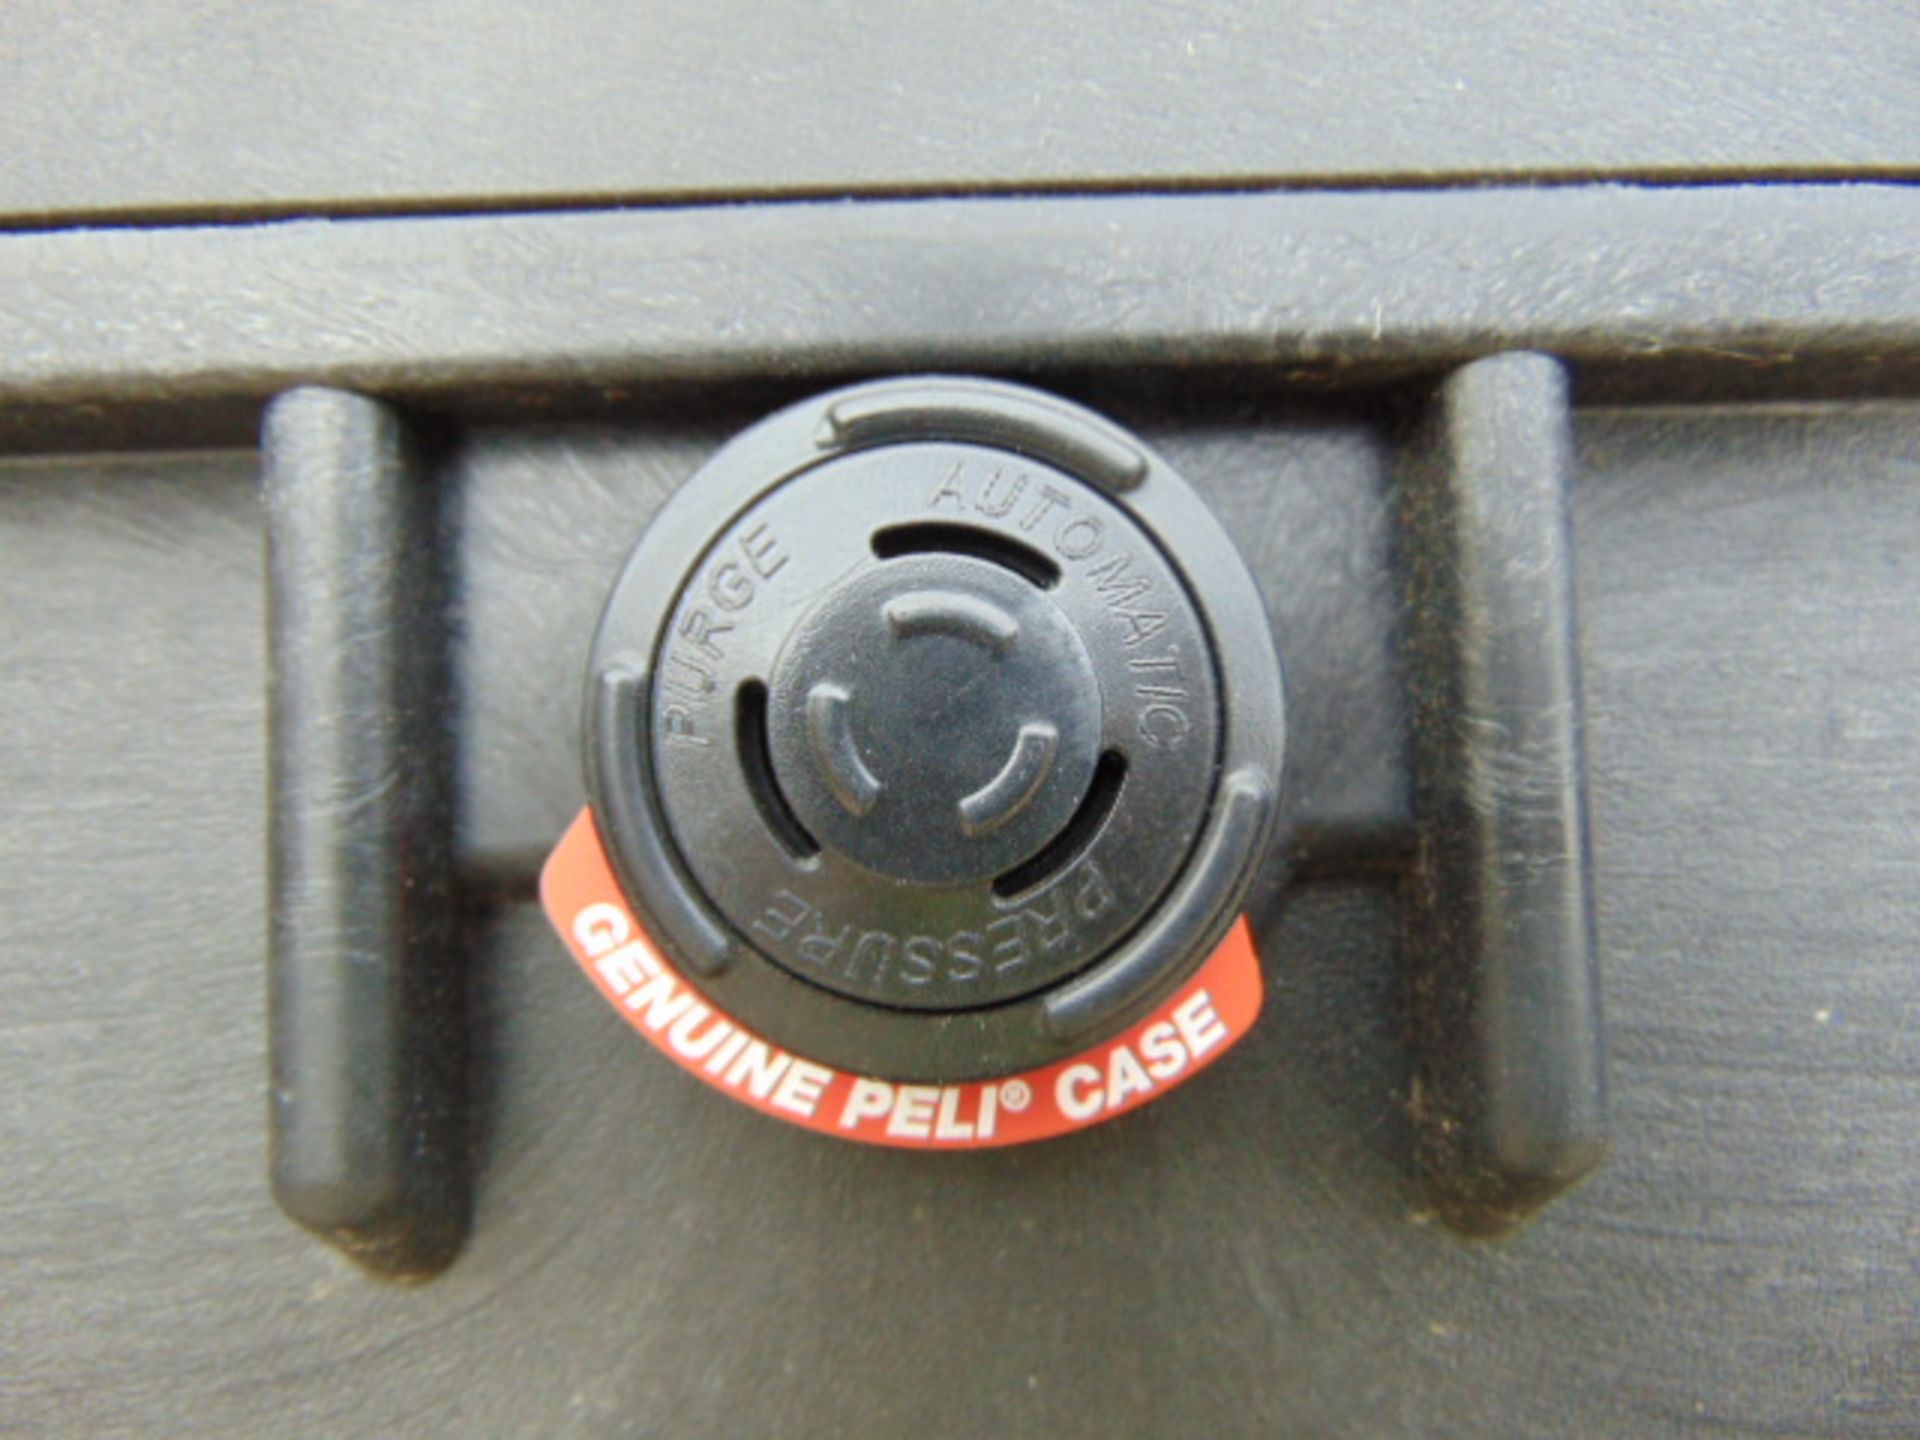 Heavy Duty Peli 0350 Cube Case - Image 9 of 10